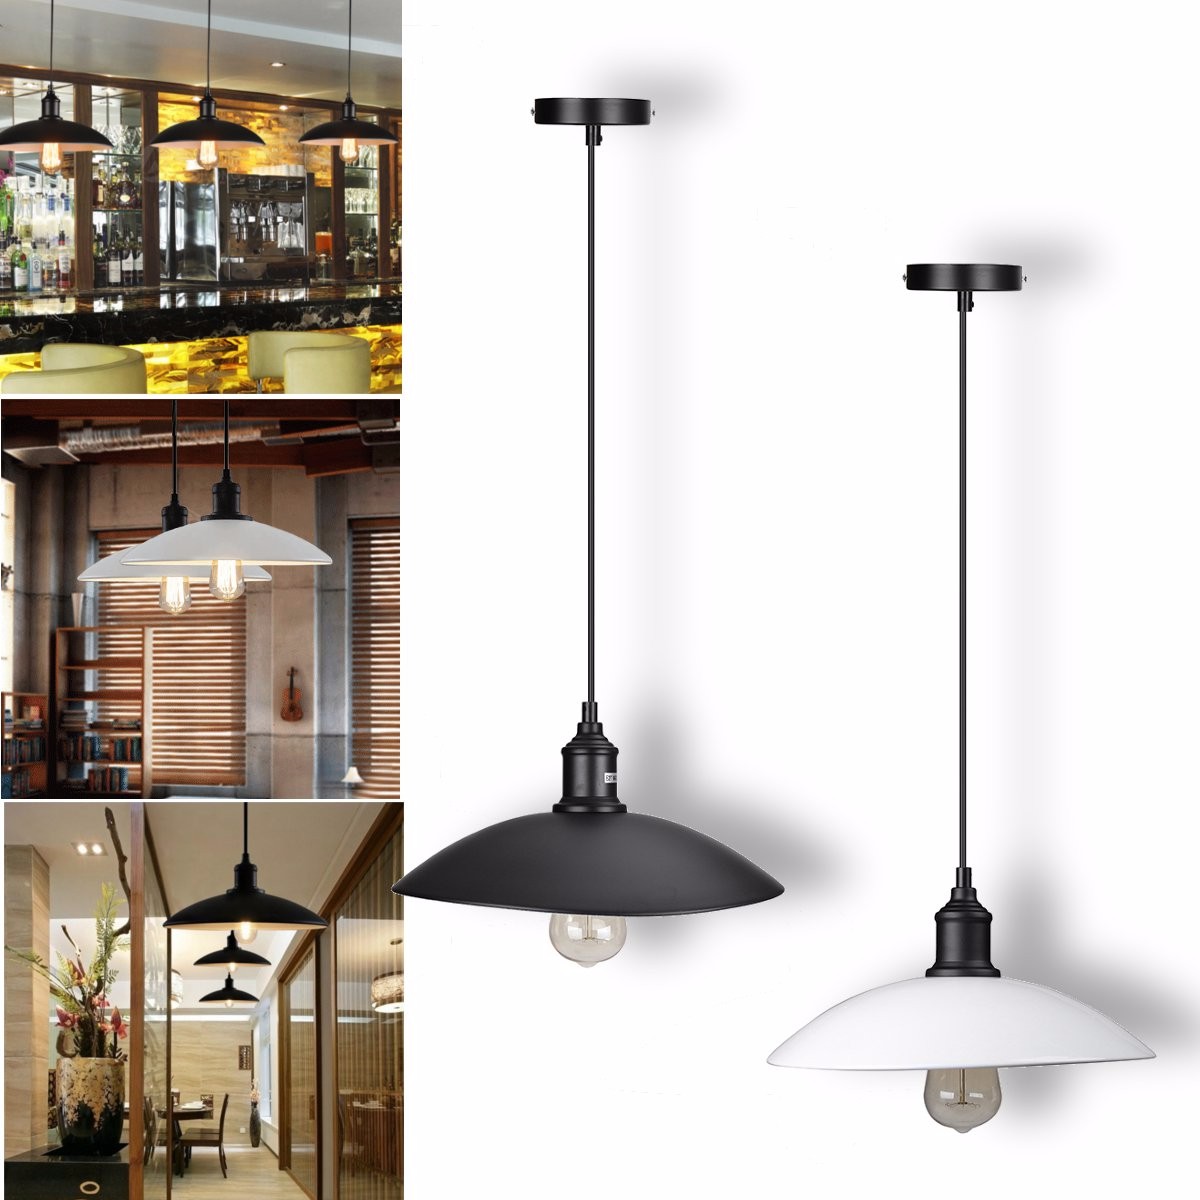 Vintage-Home-Room-Ceiling-Light-Pendant-Lamp-Fixture-Chandelier-E27-Bulb-Lampshade-Decor-1118064-9